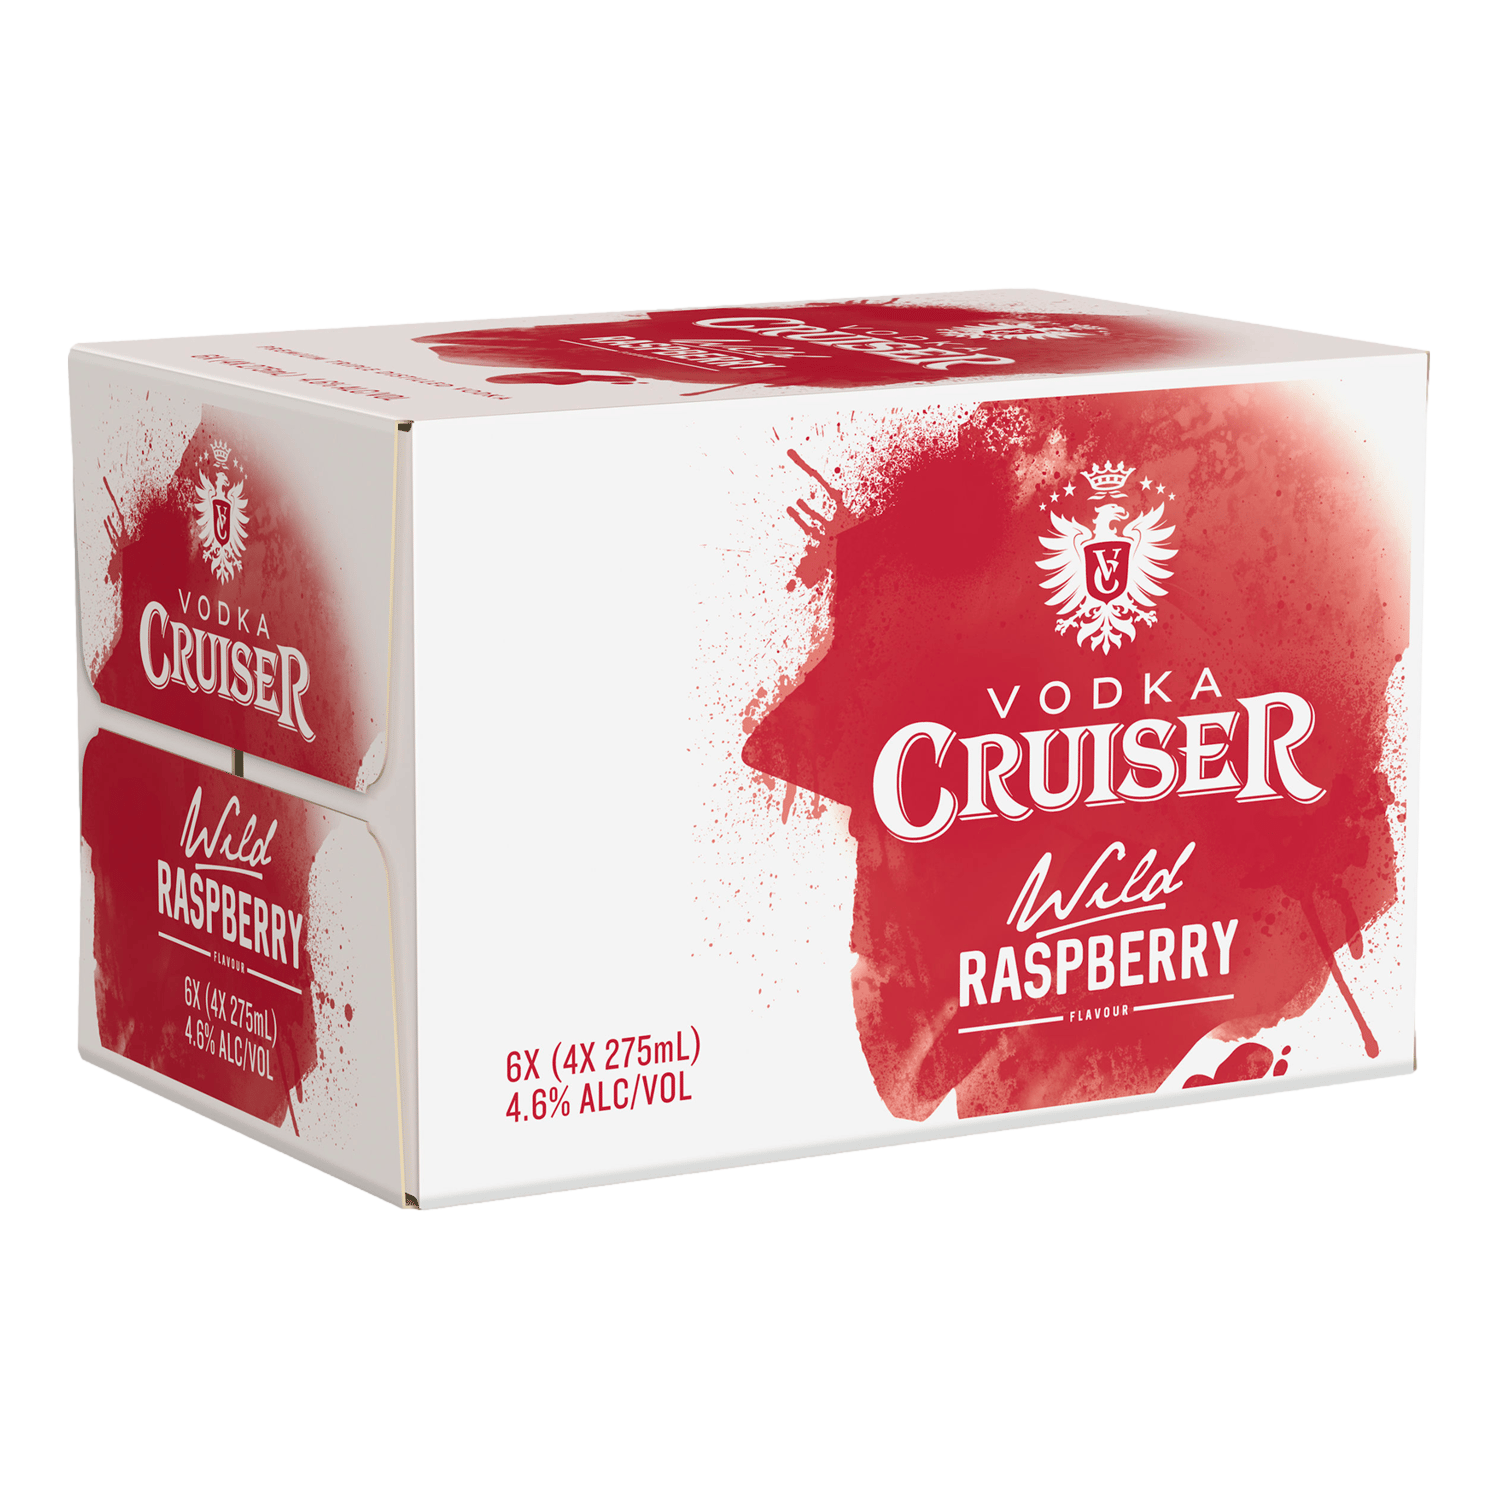 Vodka Cruiser Wild Raspberry 275ml Bottle Case of 24